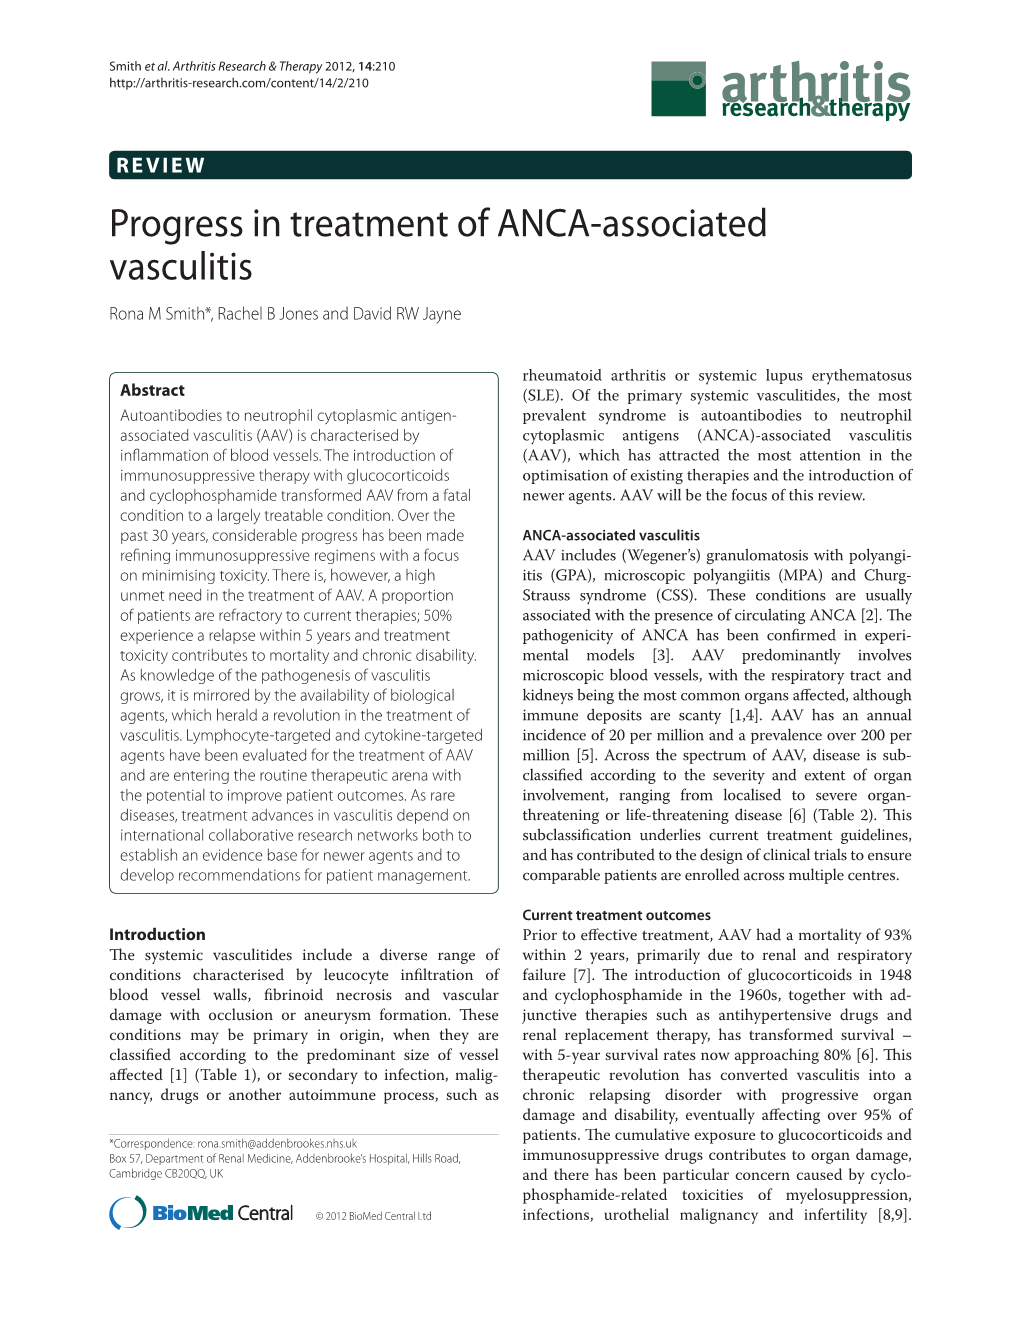 Progress in Treatment of ANCA-Associated Vasculitis Rona M Smith*, Rachel B Jones and David RW Jayne